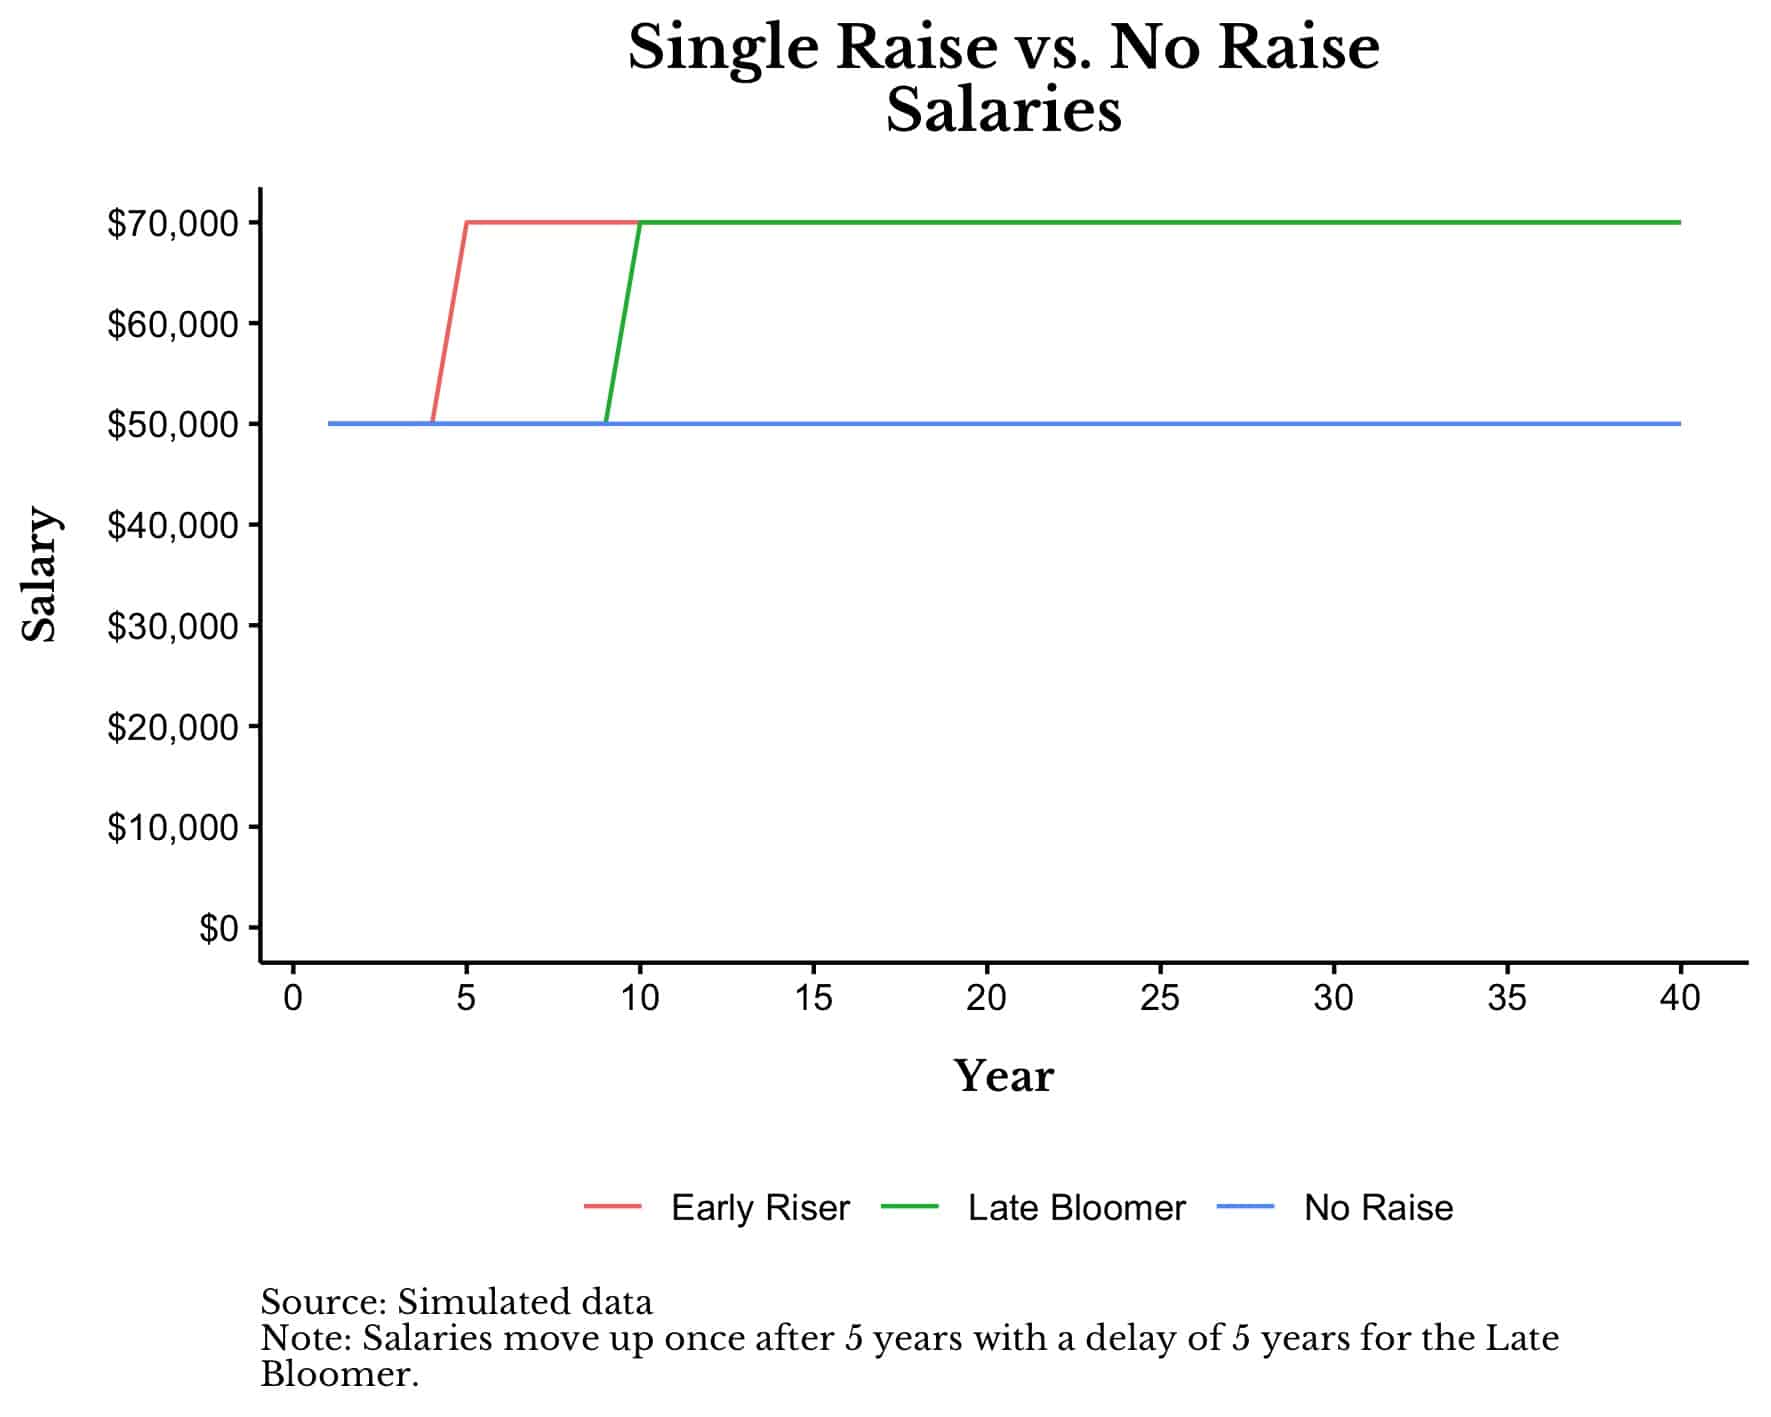 Single raise versus no raise on career salary